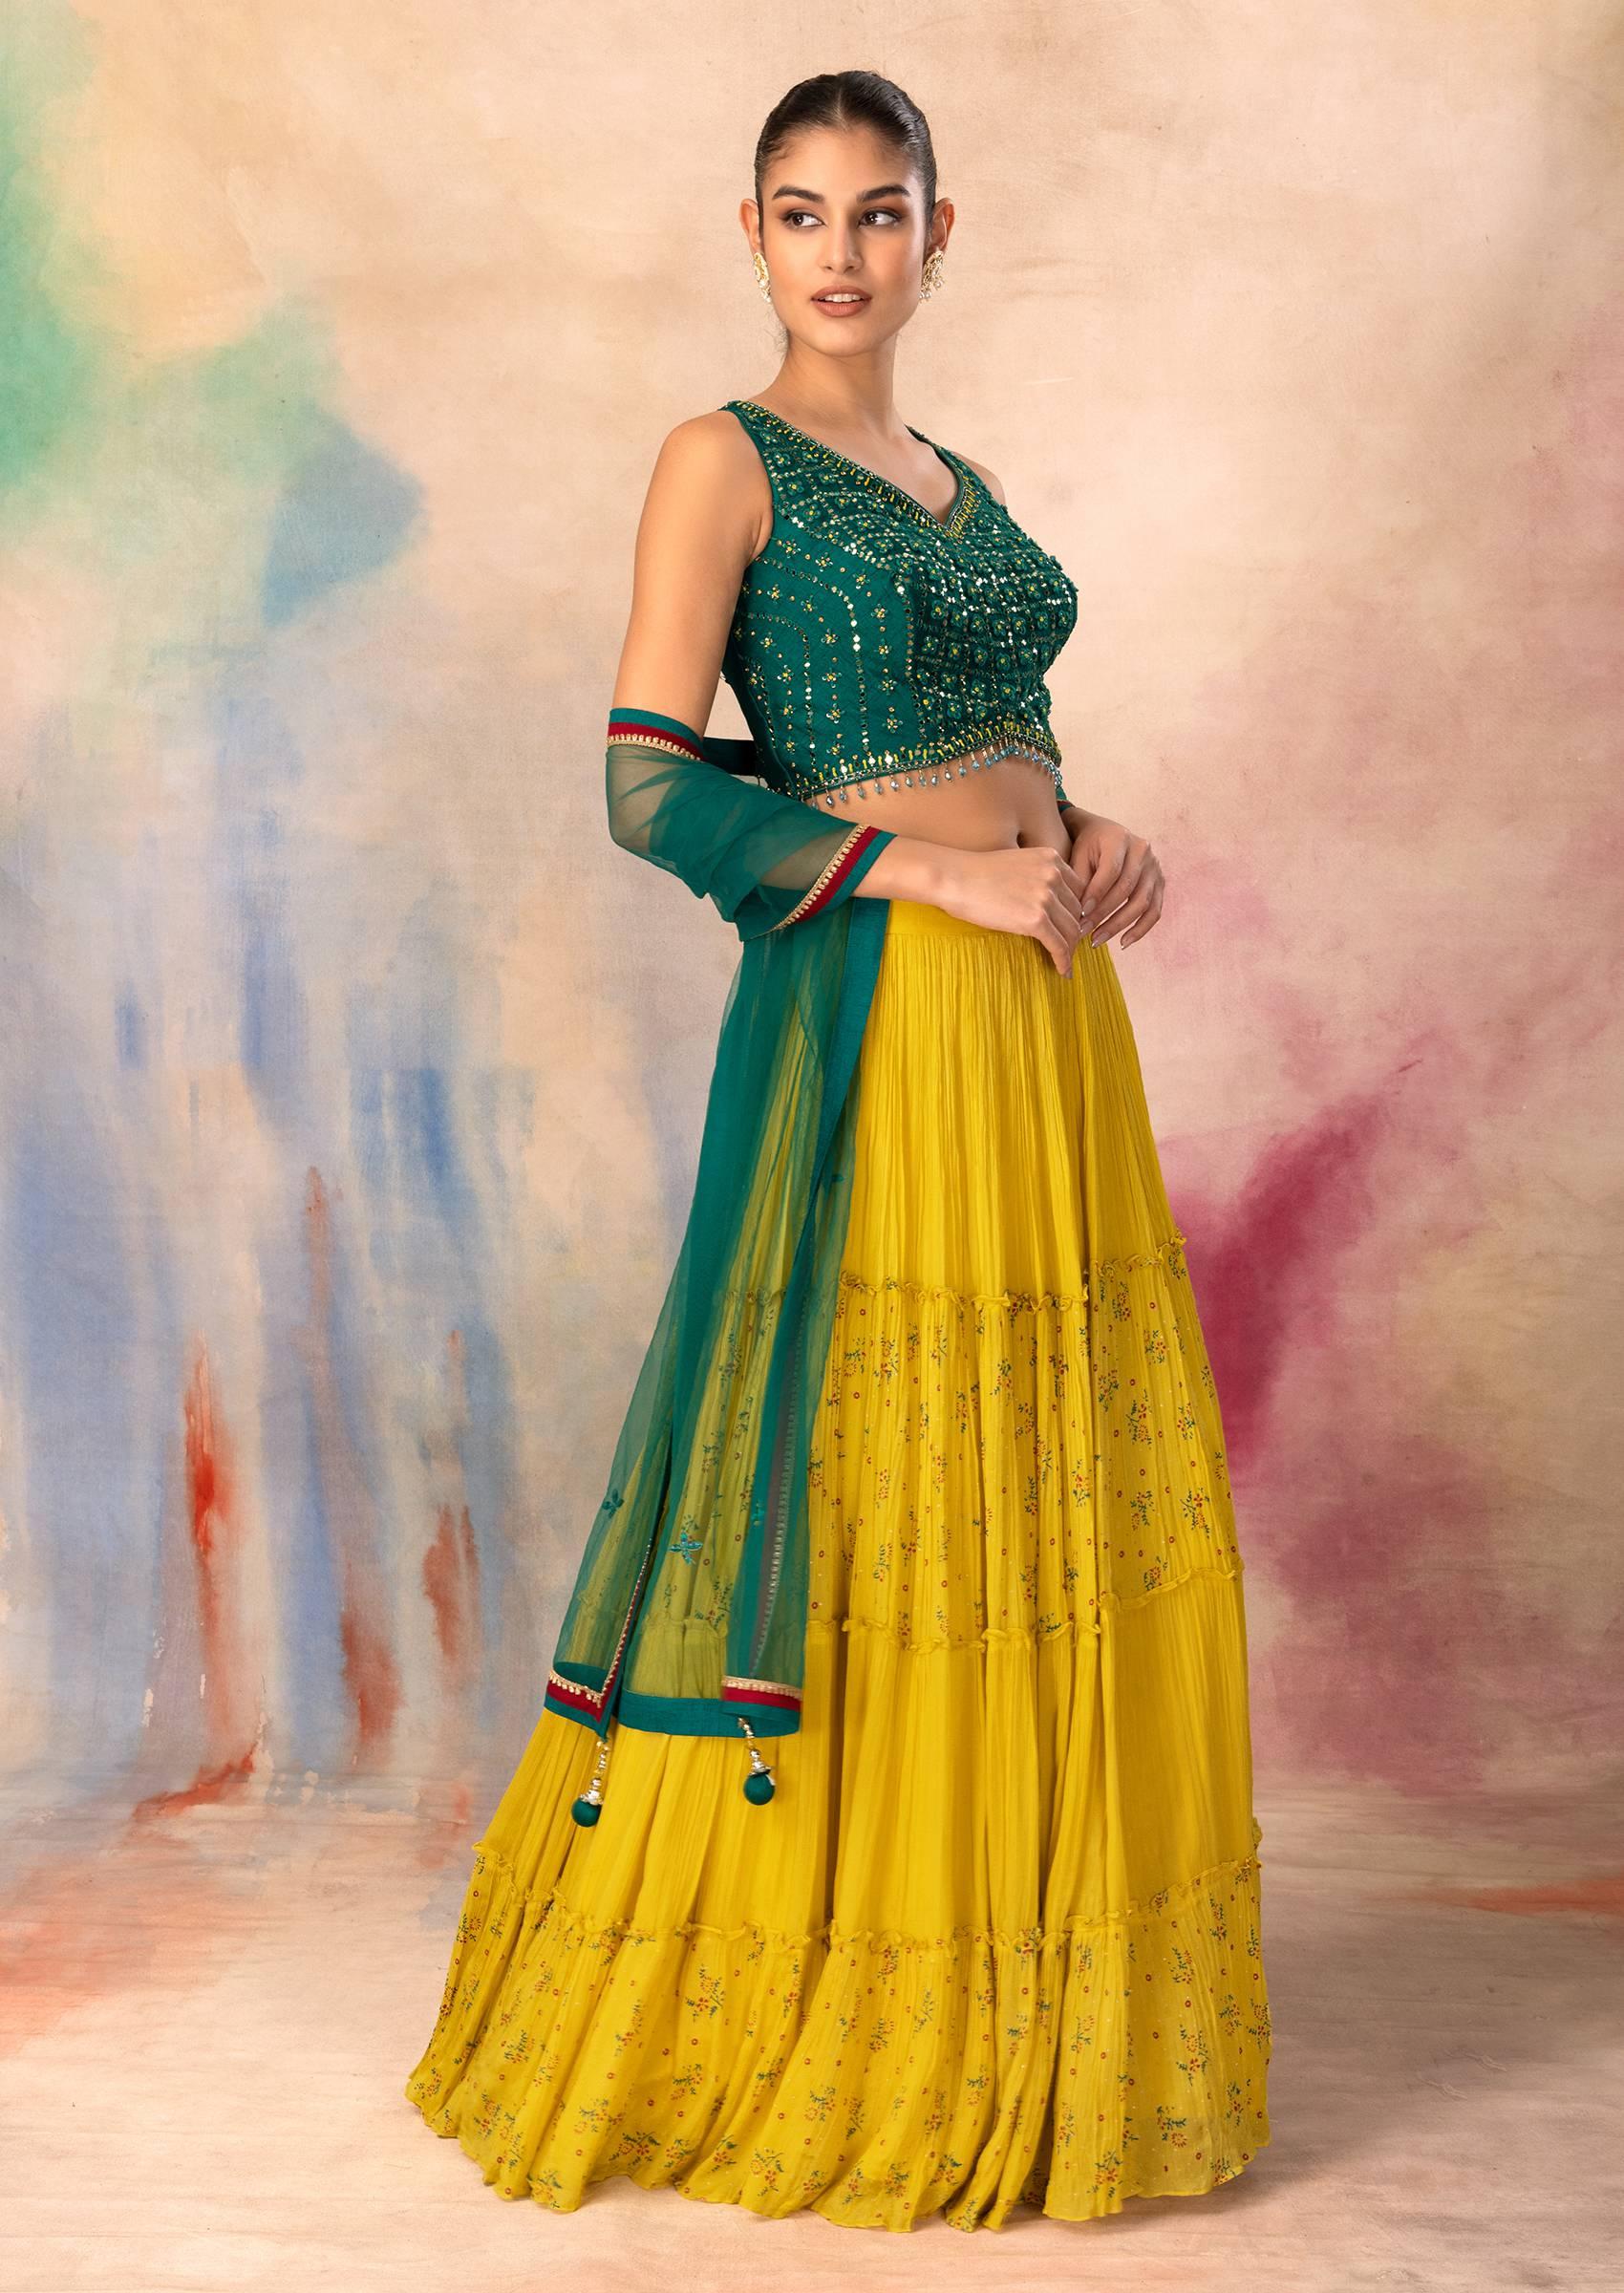 Indian Bridal Wear - Kreeva Green and Yellow Lehenga by B Anu Designs